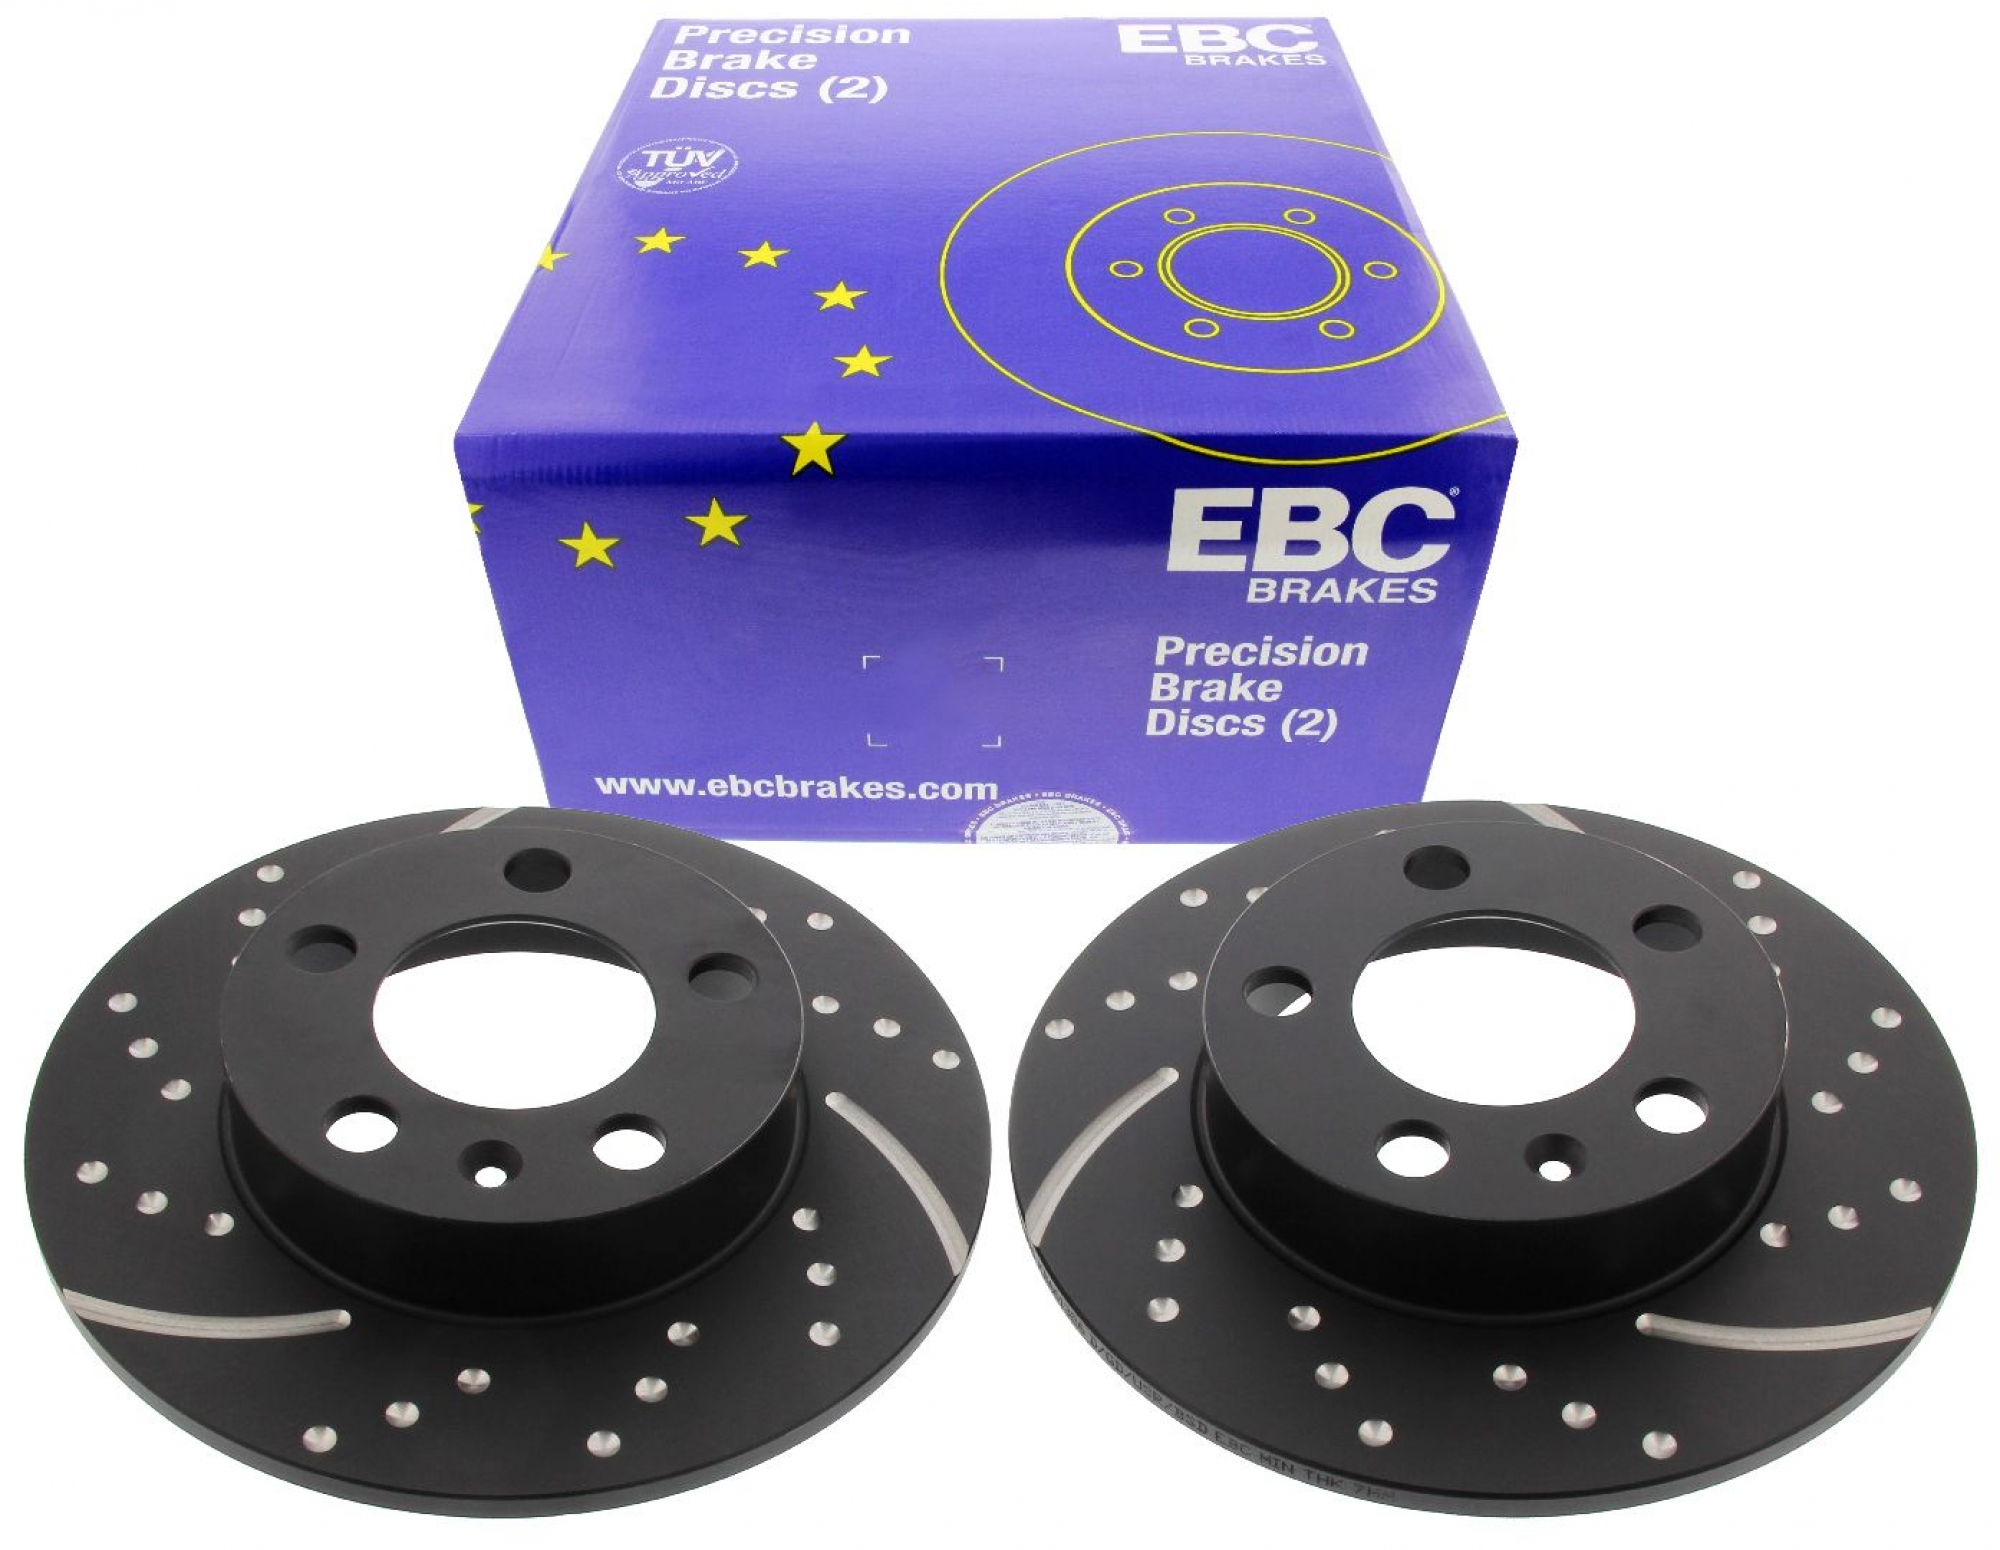 EBC-Bremsscheiben, Turbo Groove Disc Black (2-teilig), HA, VW Golf 4, Audi A3, Ø 230 mm